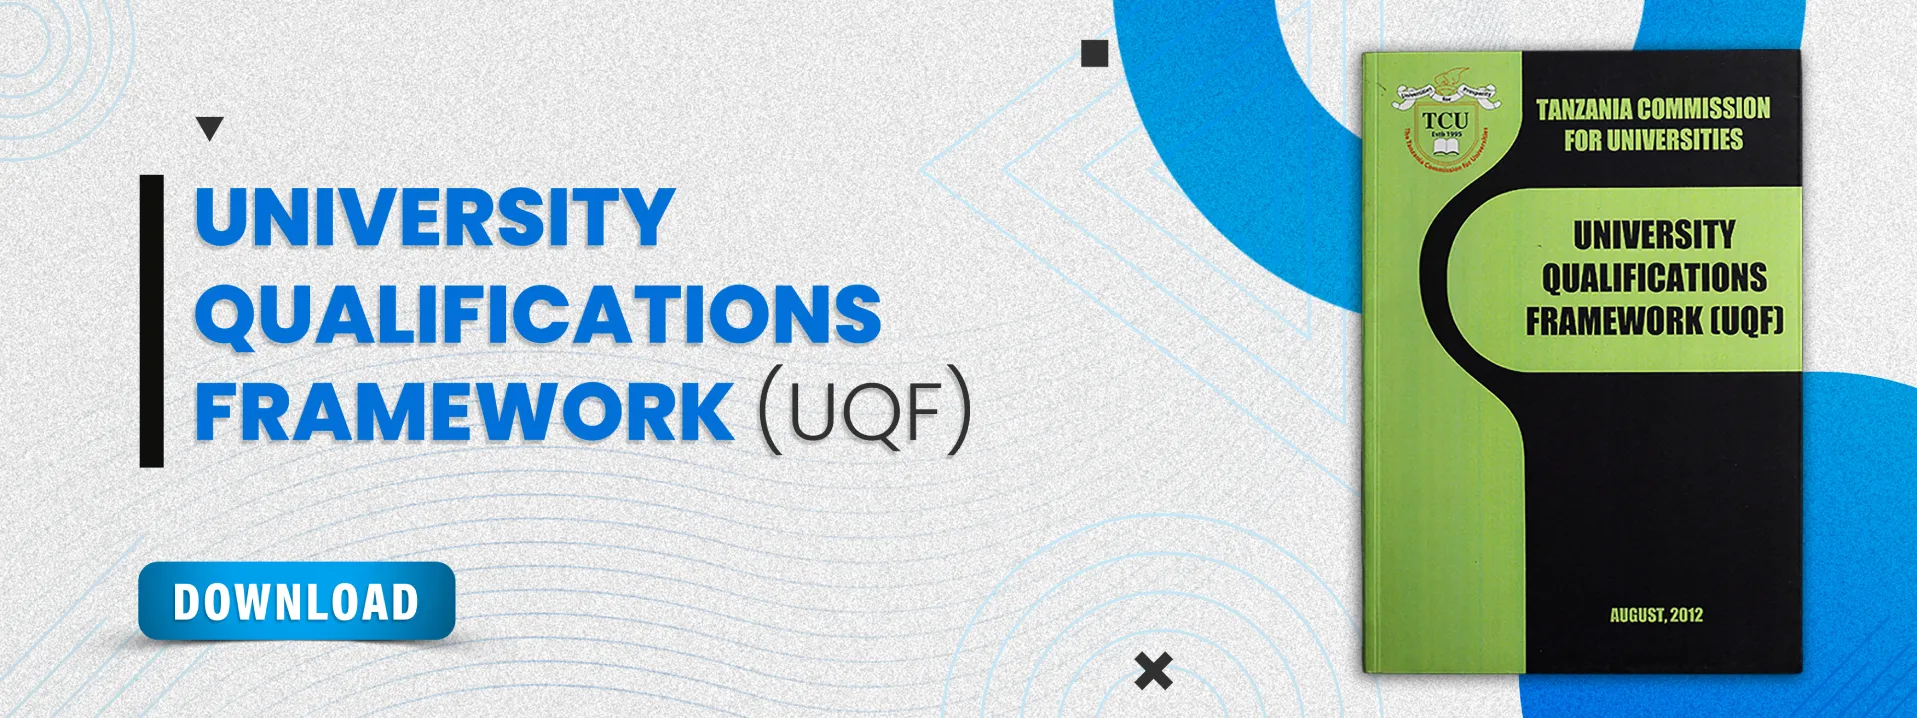 University Qualifications Framework (UQF)